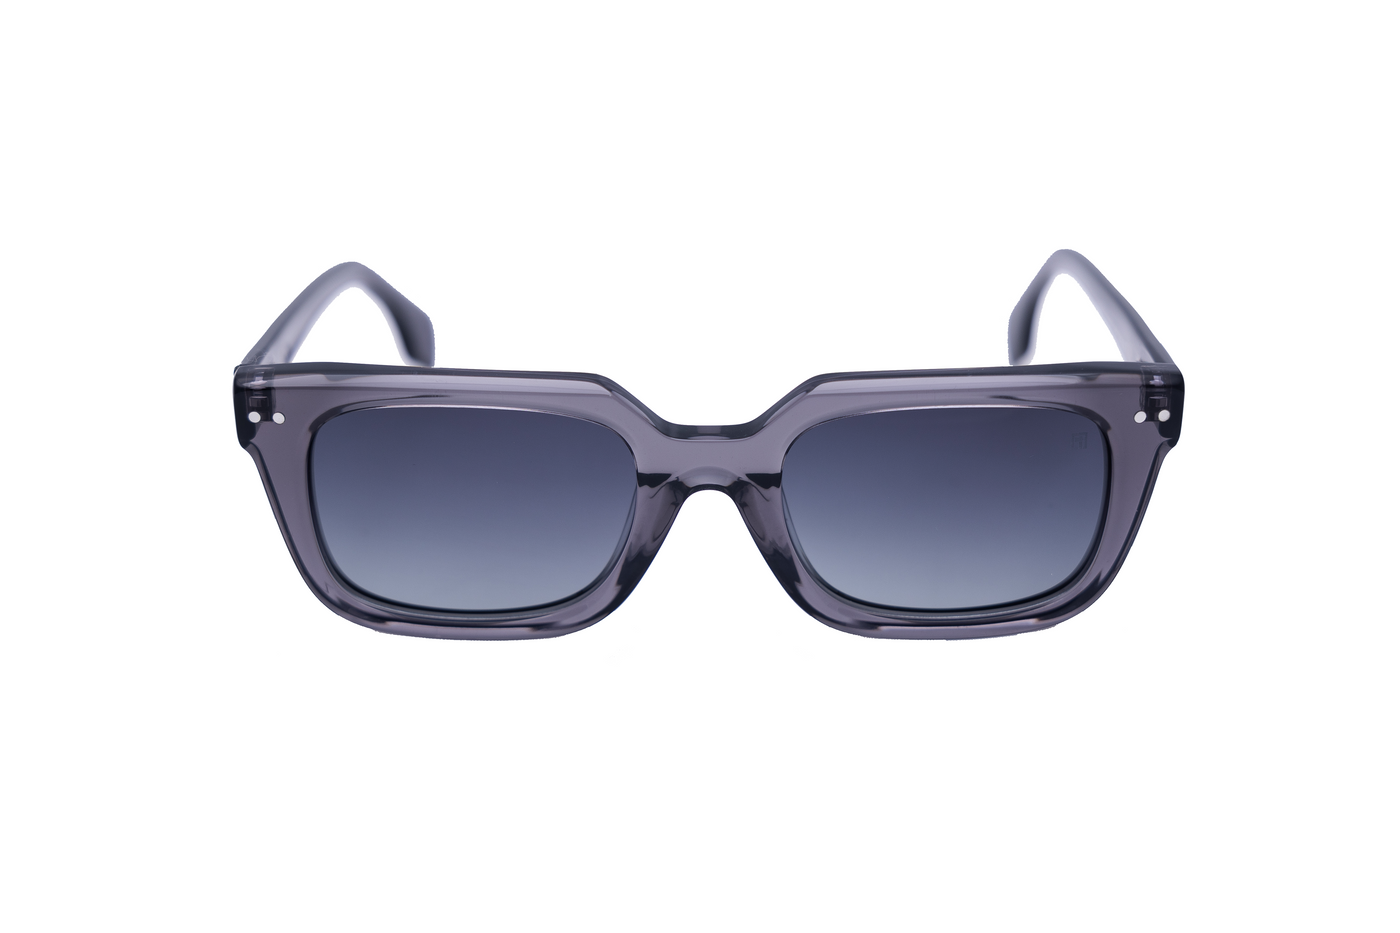 Tomahawk Shades Drifter Class Polarized Sunglasses for Men & Women - Impact Resistant Lenses & Full UV400 Protection